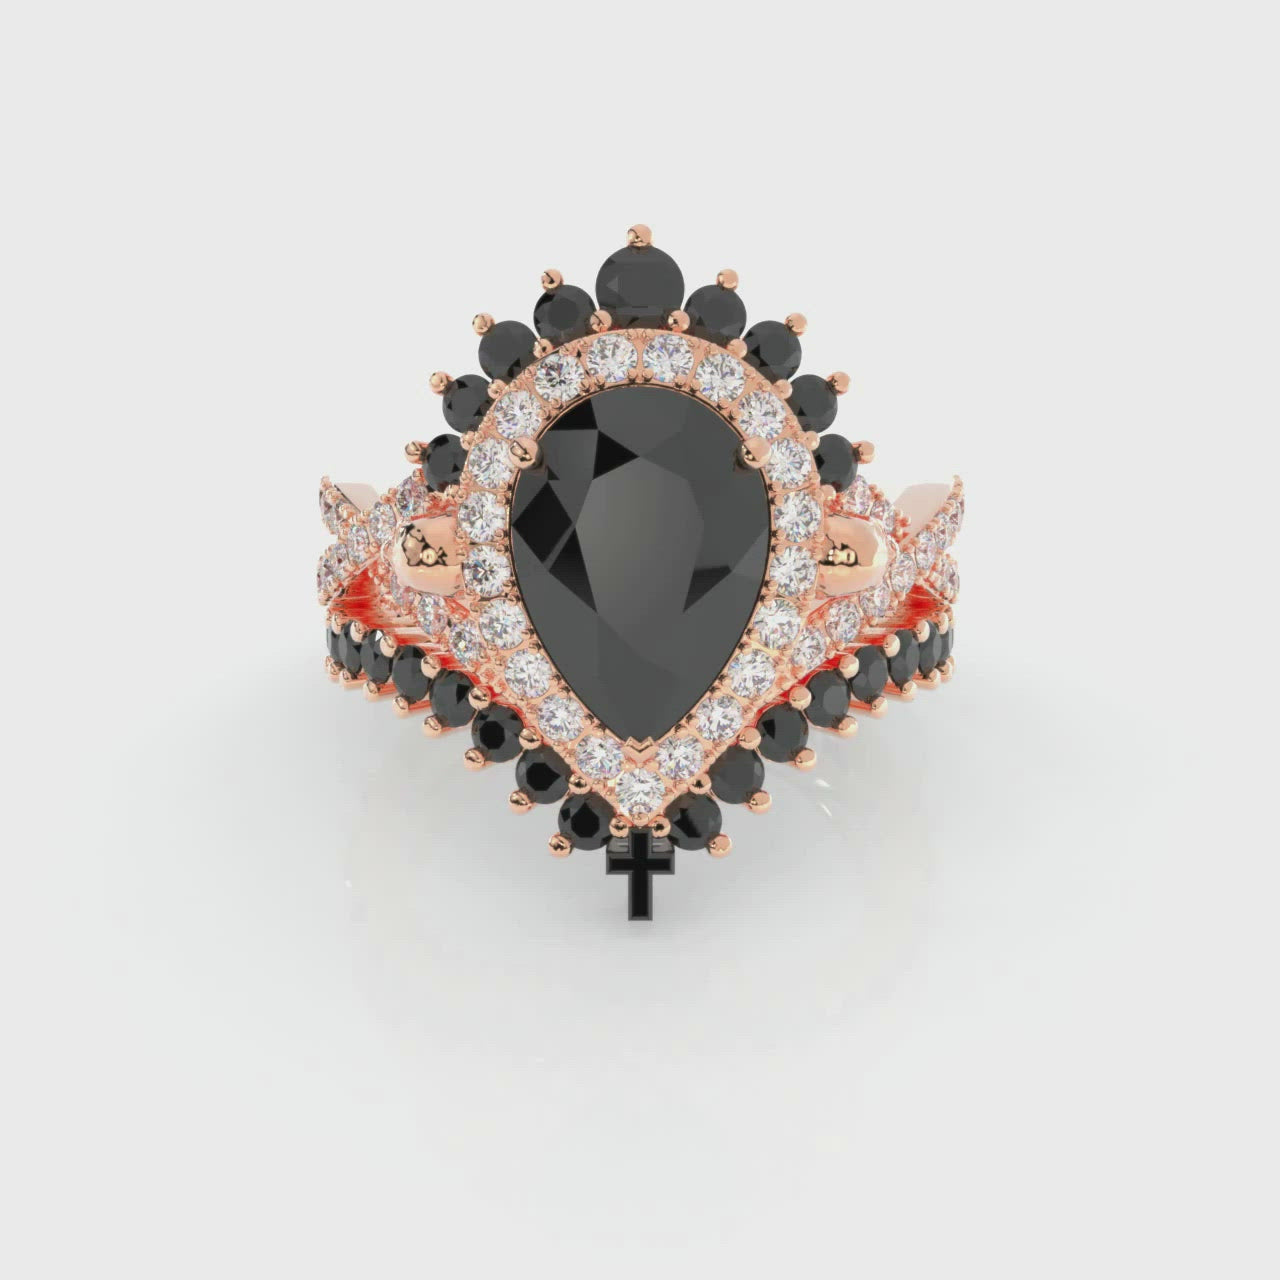 Loyalty Ring- 1ct Pear Cut Black Diamond Skull Ring Set